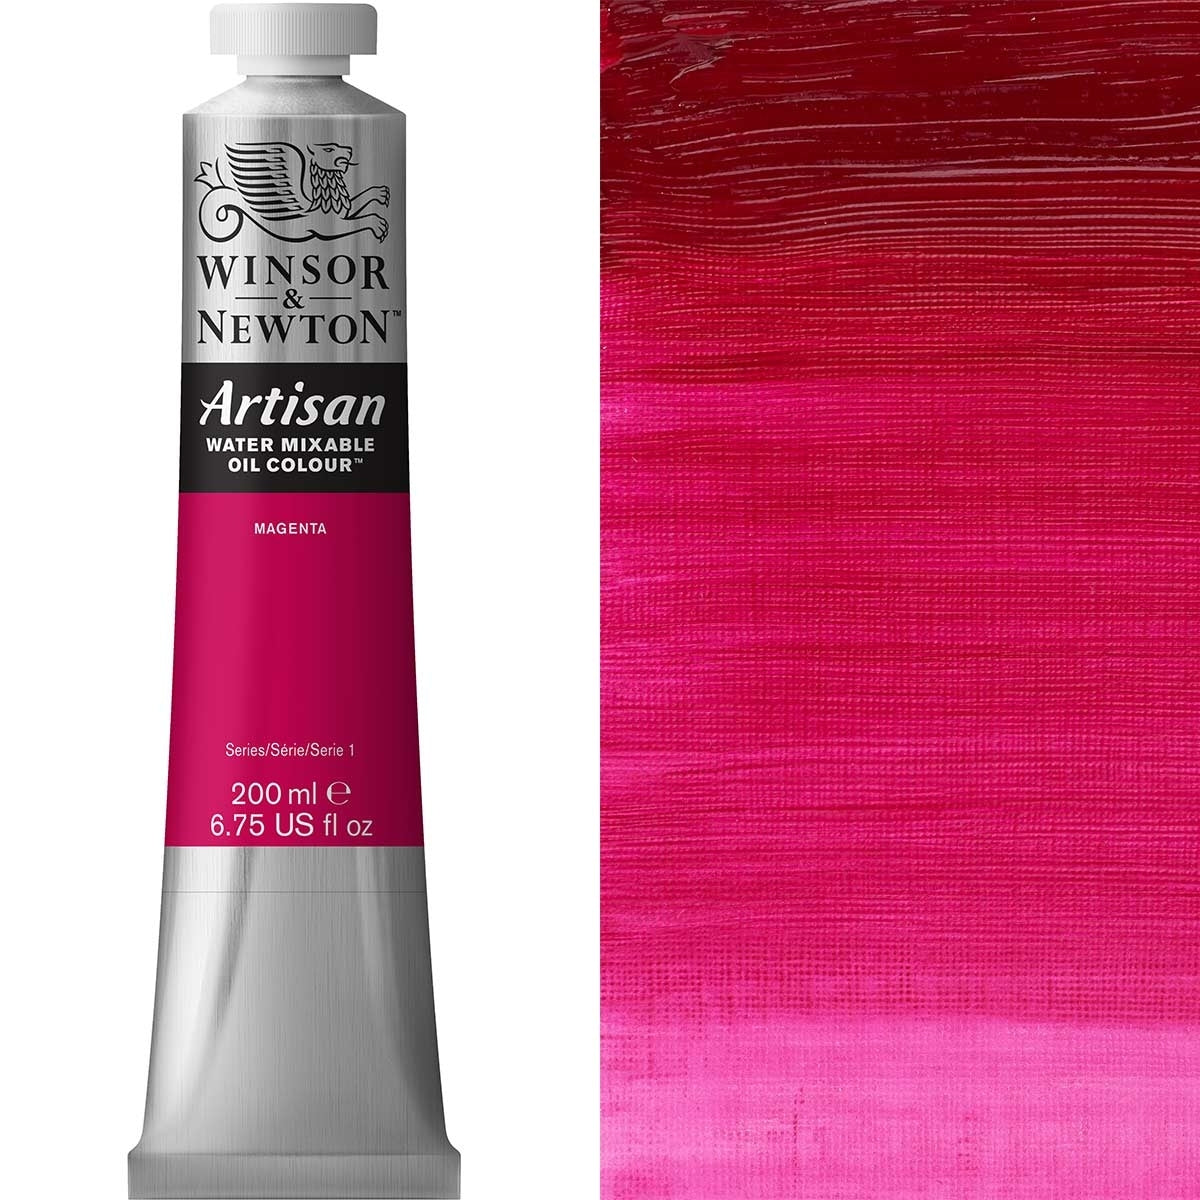 Winsor and Newton - Artisan Oil Colour Watermixable - 200ml - Magenta